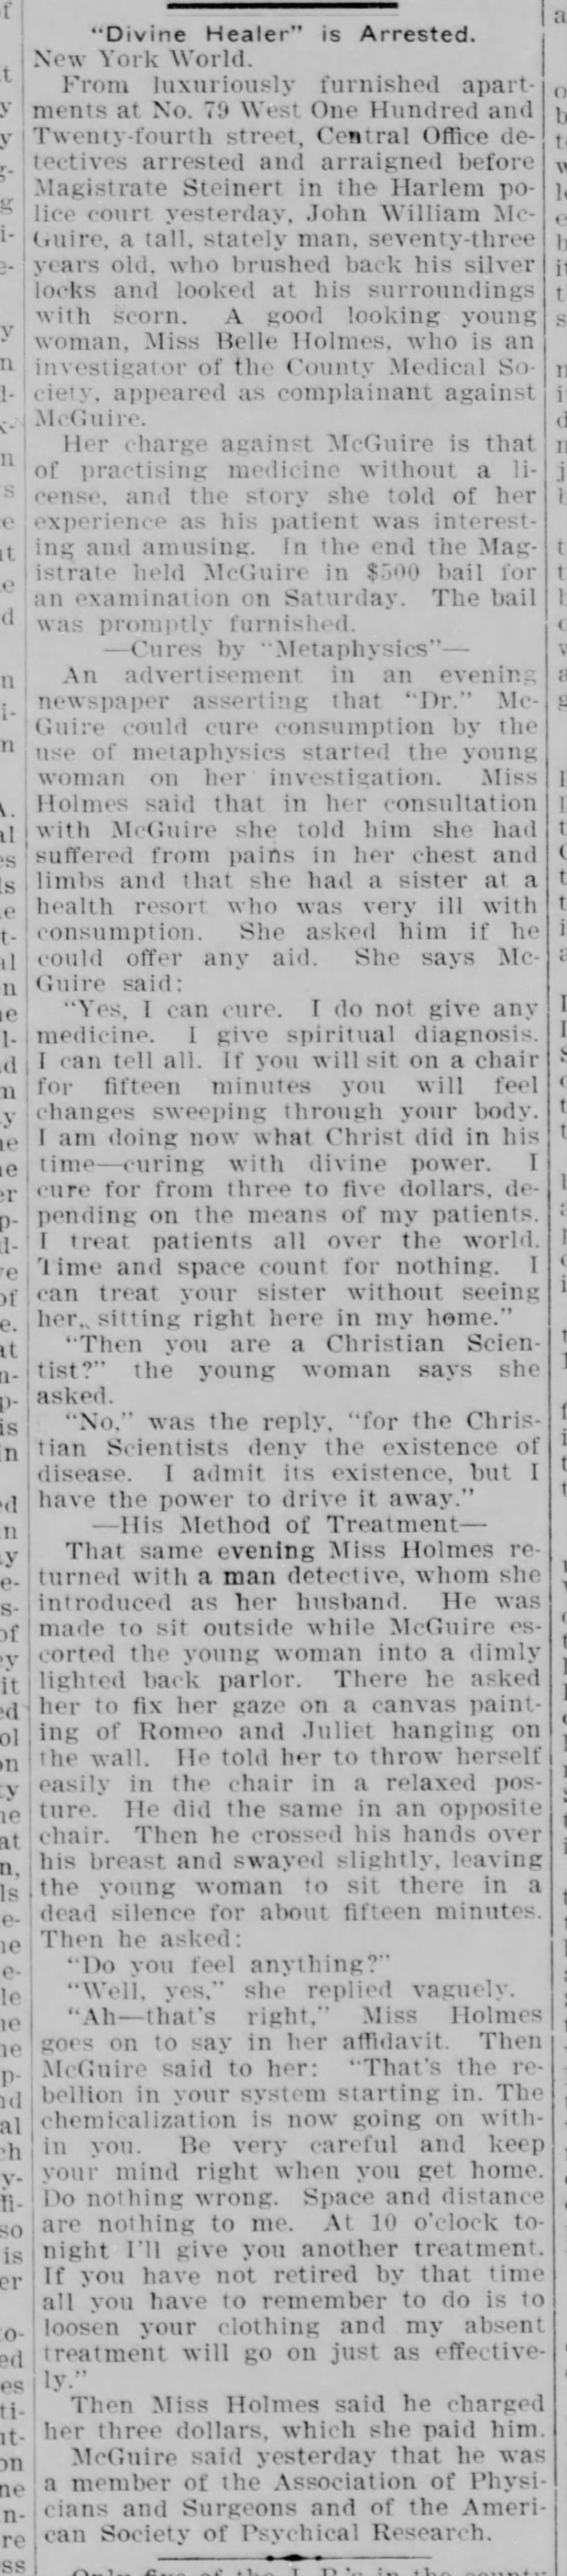 "Divine Healer Is Arrested" 1910 (Frances Benzecry)